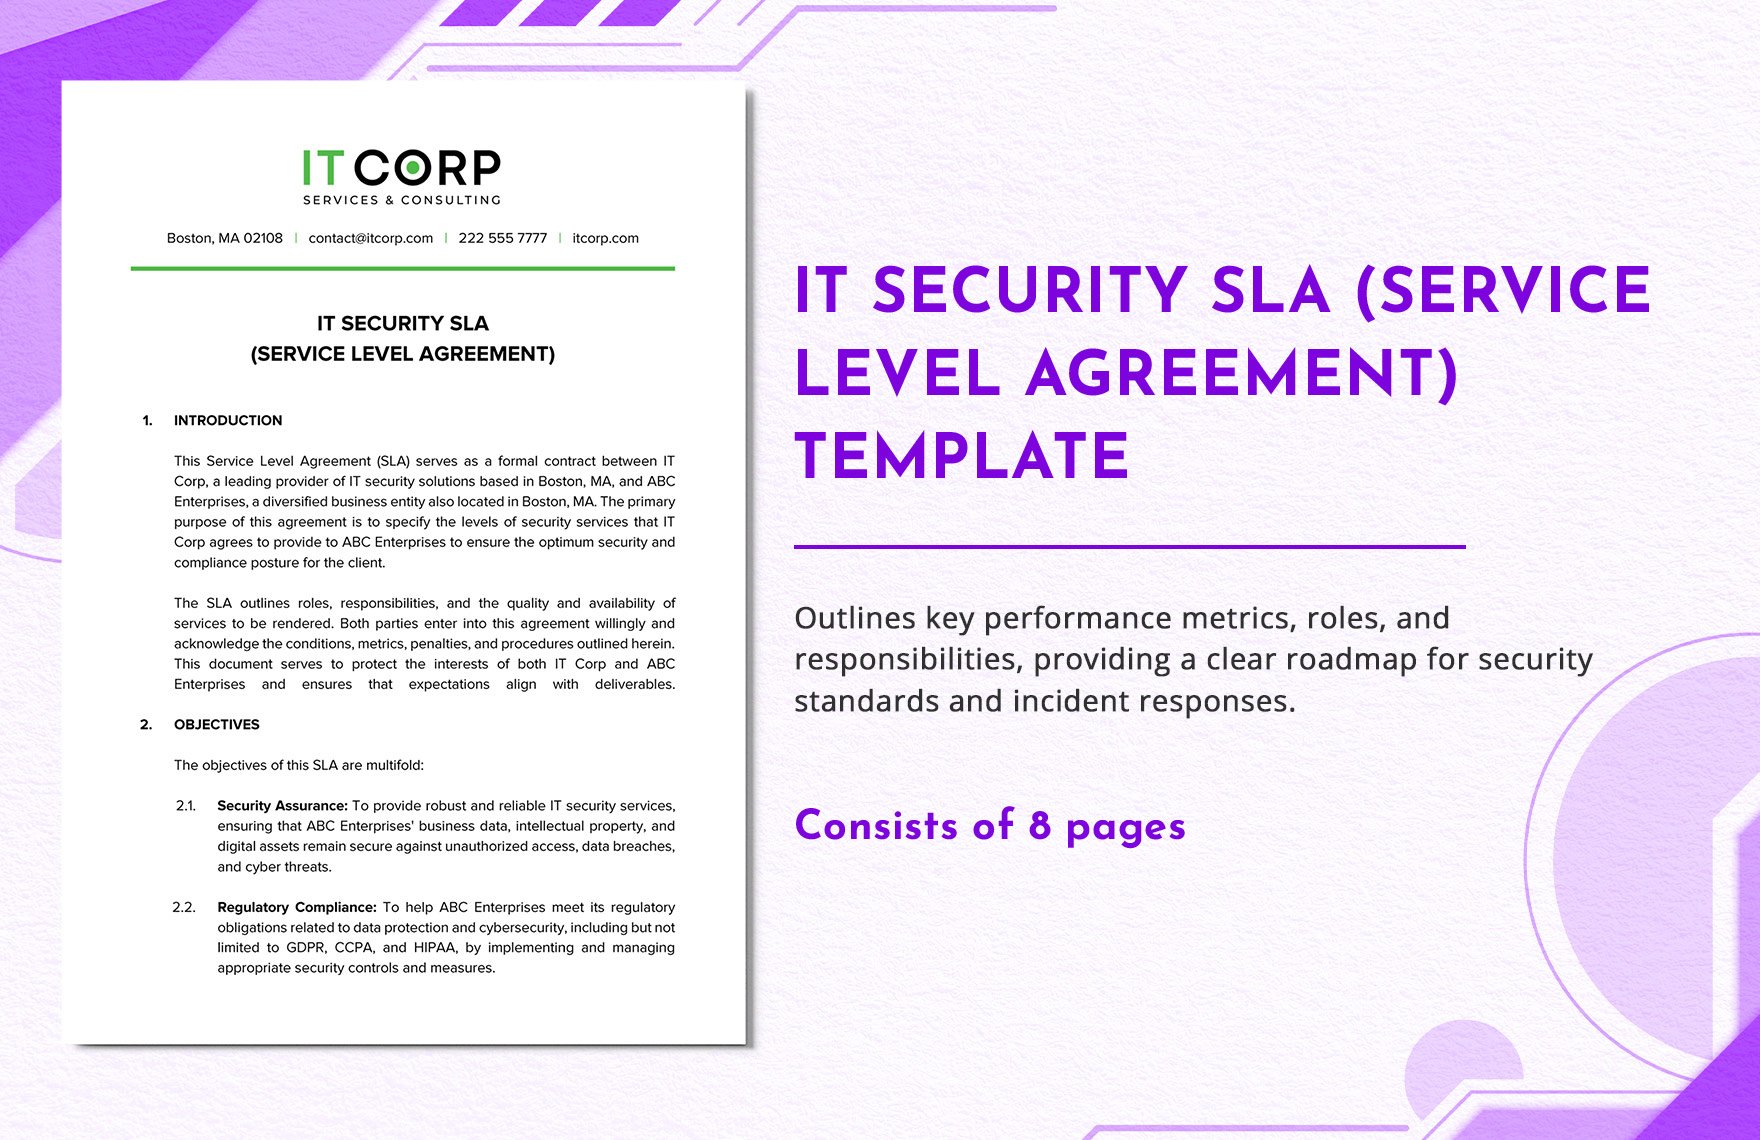 IT Security SLA (Service Level Agreement) Template